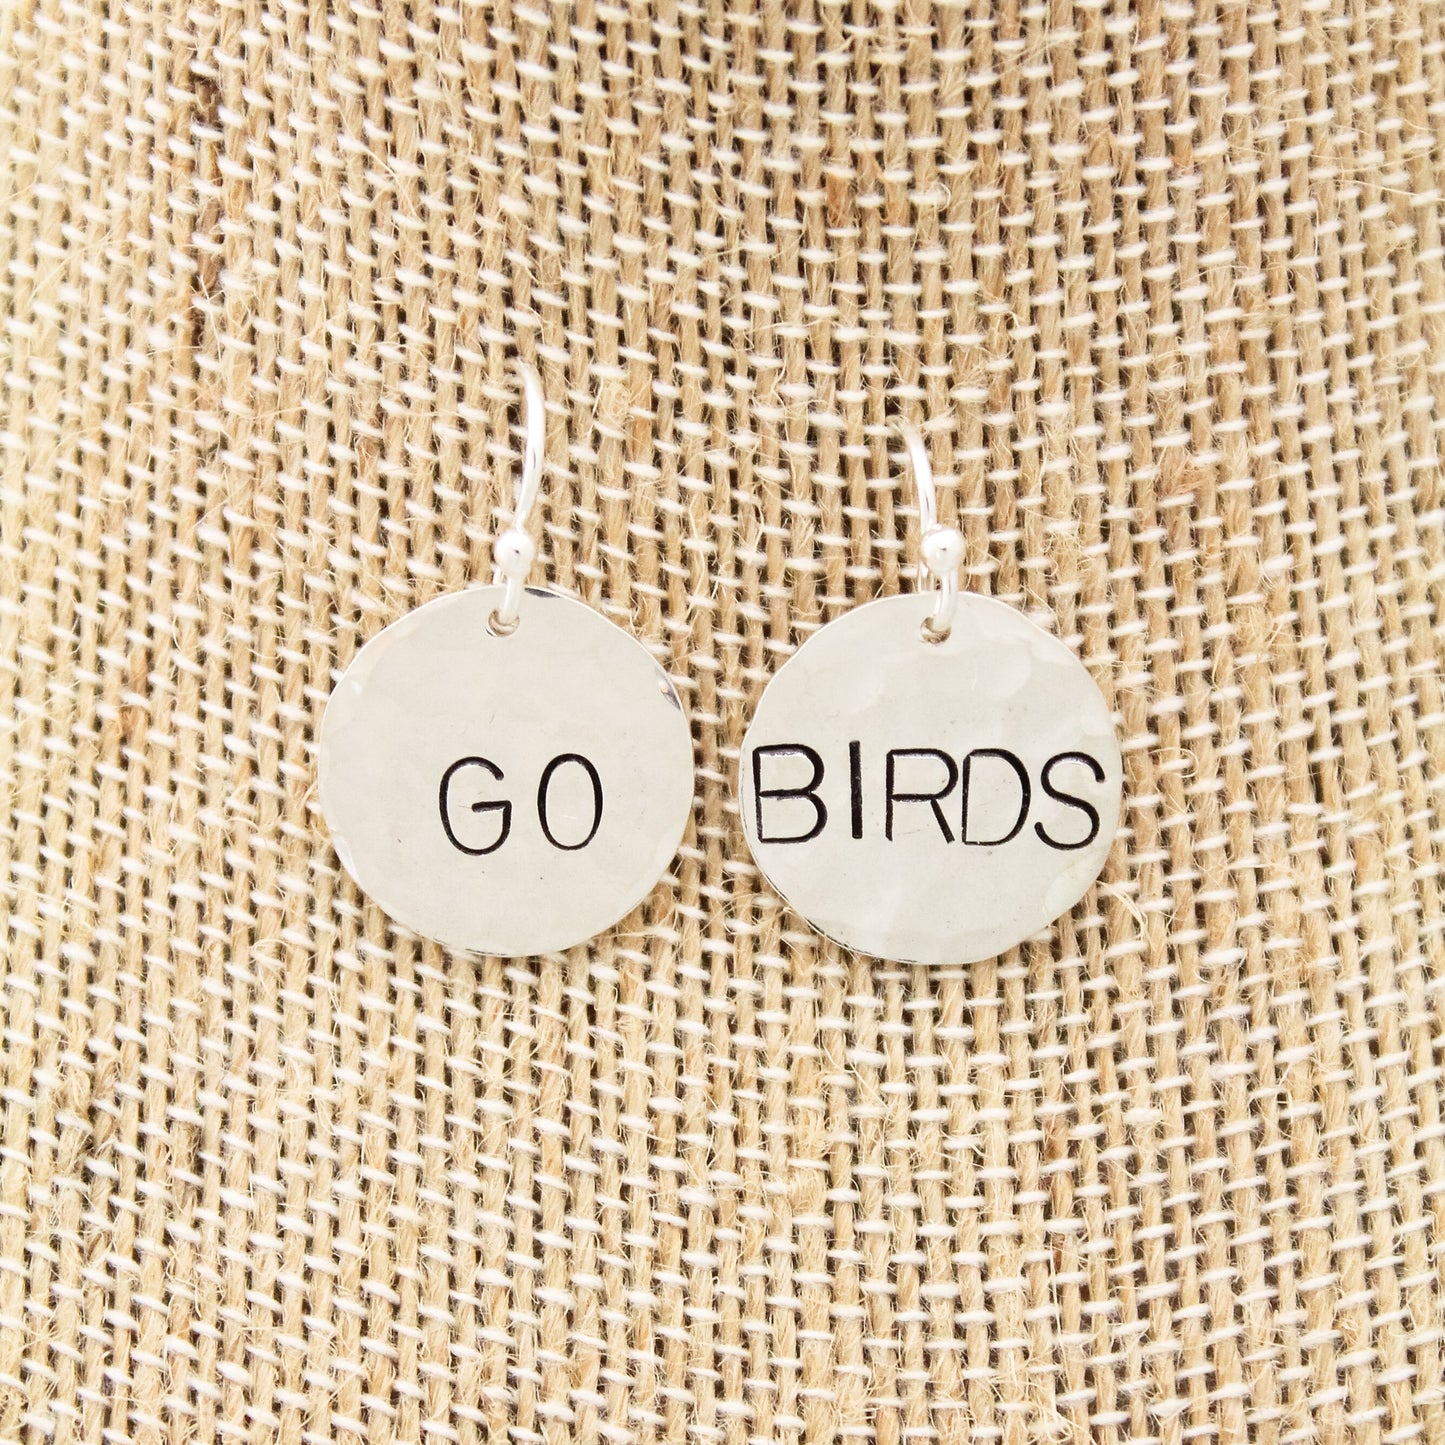 GO BIRDS Eagles Football Earrings in Sterling Silver, Game Day Eagles Jewelry, Philadelphia Eagles Earrings, Gifts for Her, Football Jewelry